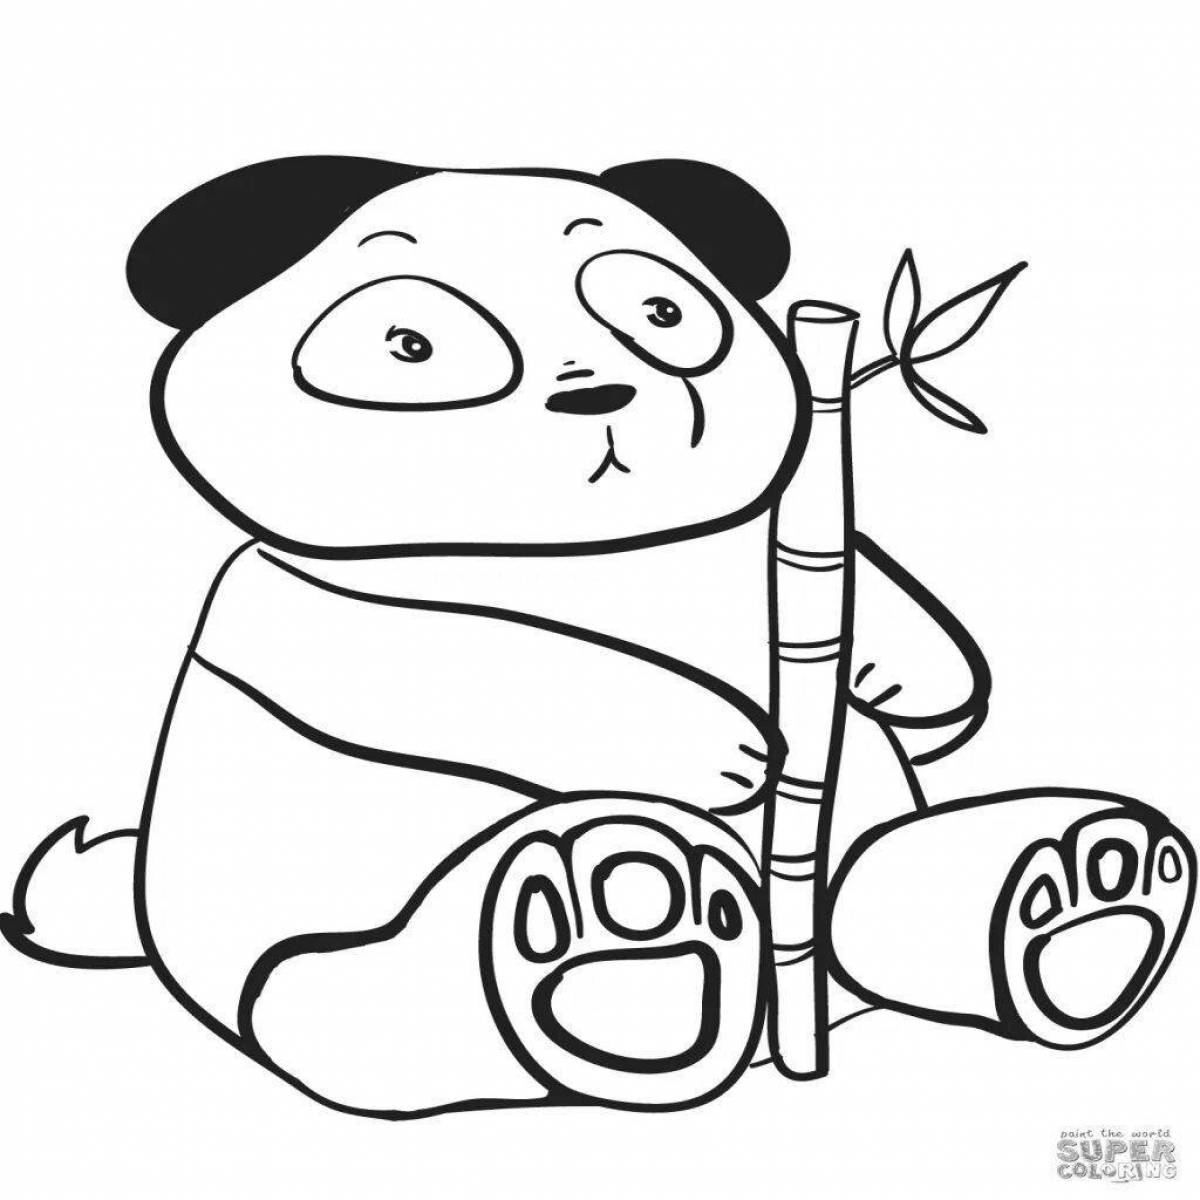 Coloring wild panda with bamboo